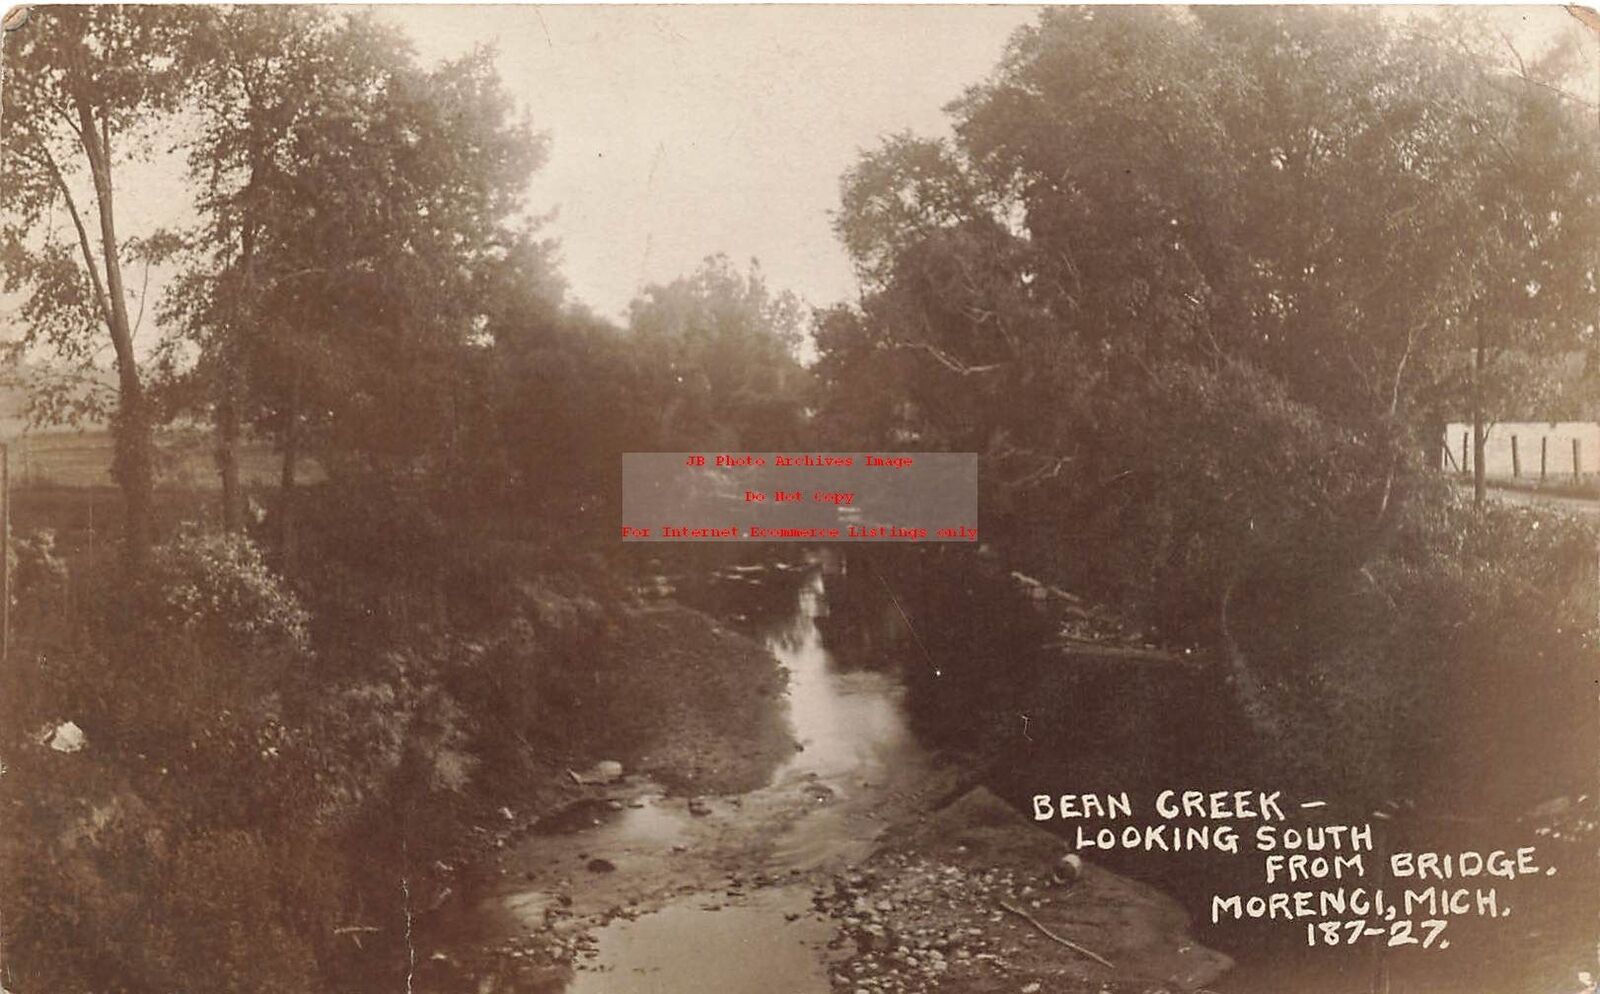 MI, Morenci, Michigan, RPPC, Bean Creek, Looking South, Photo No 187-27